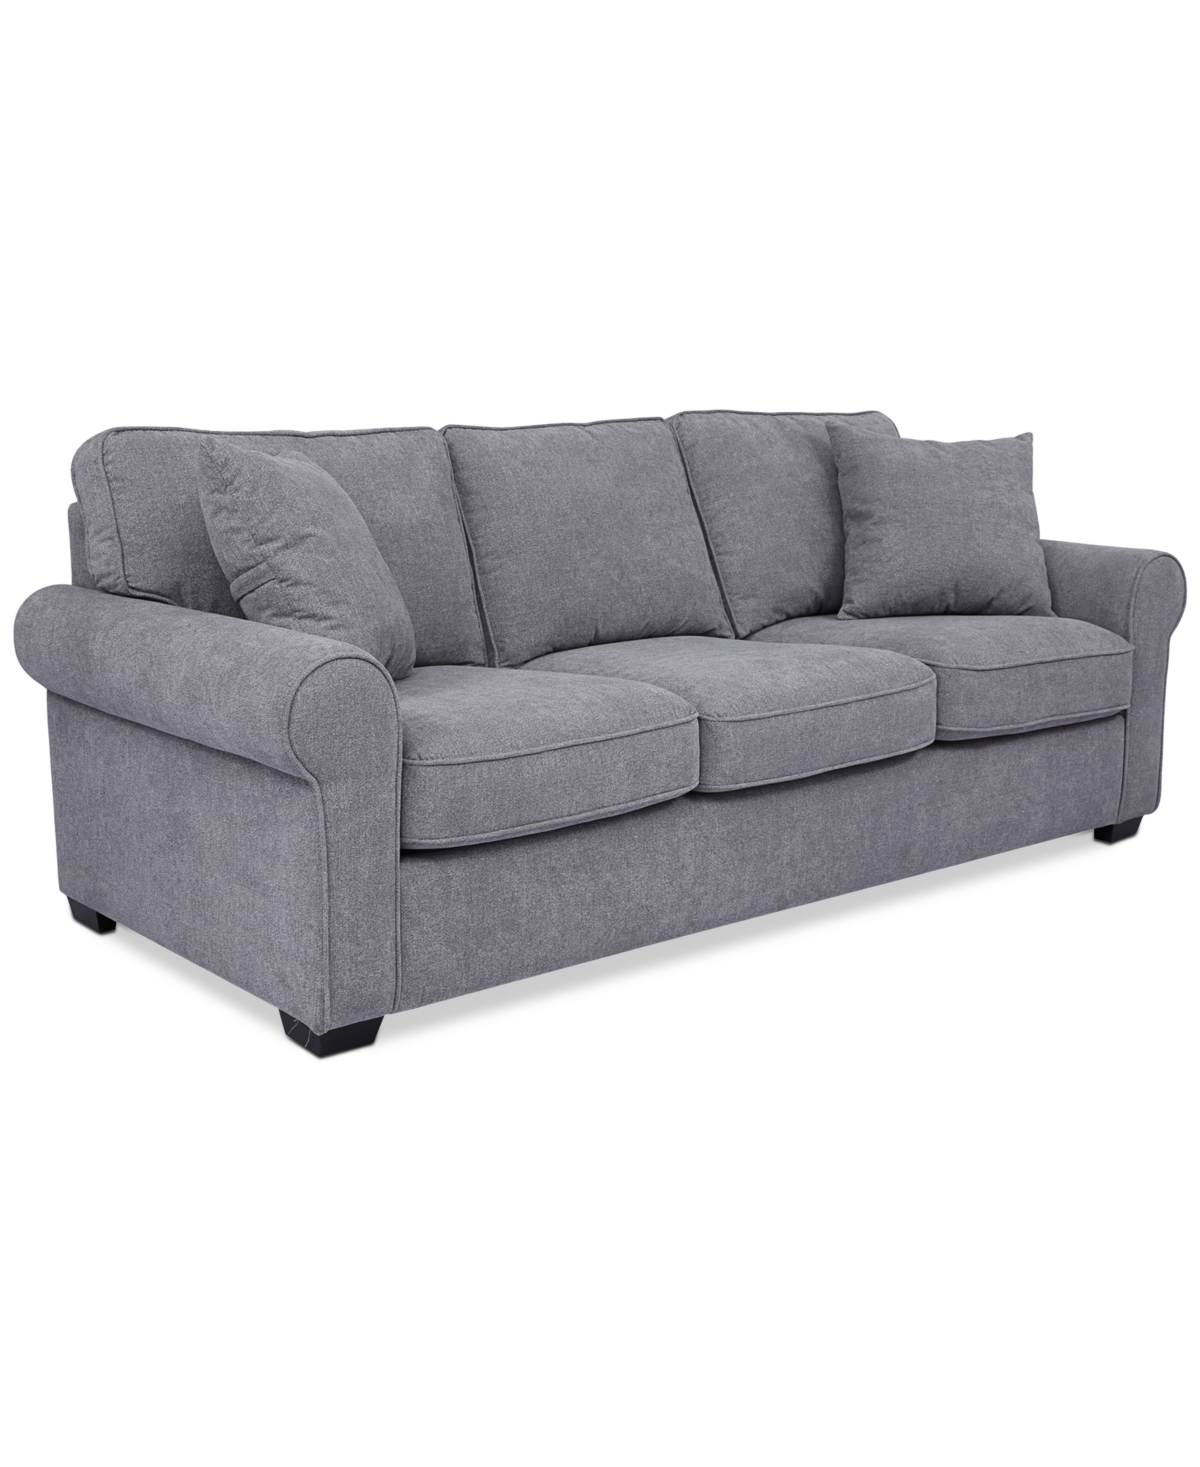 Ladlow 90 Fabric Roll Arm Sofa, Created for Macys